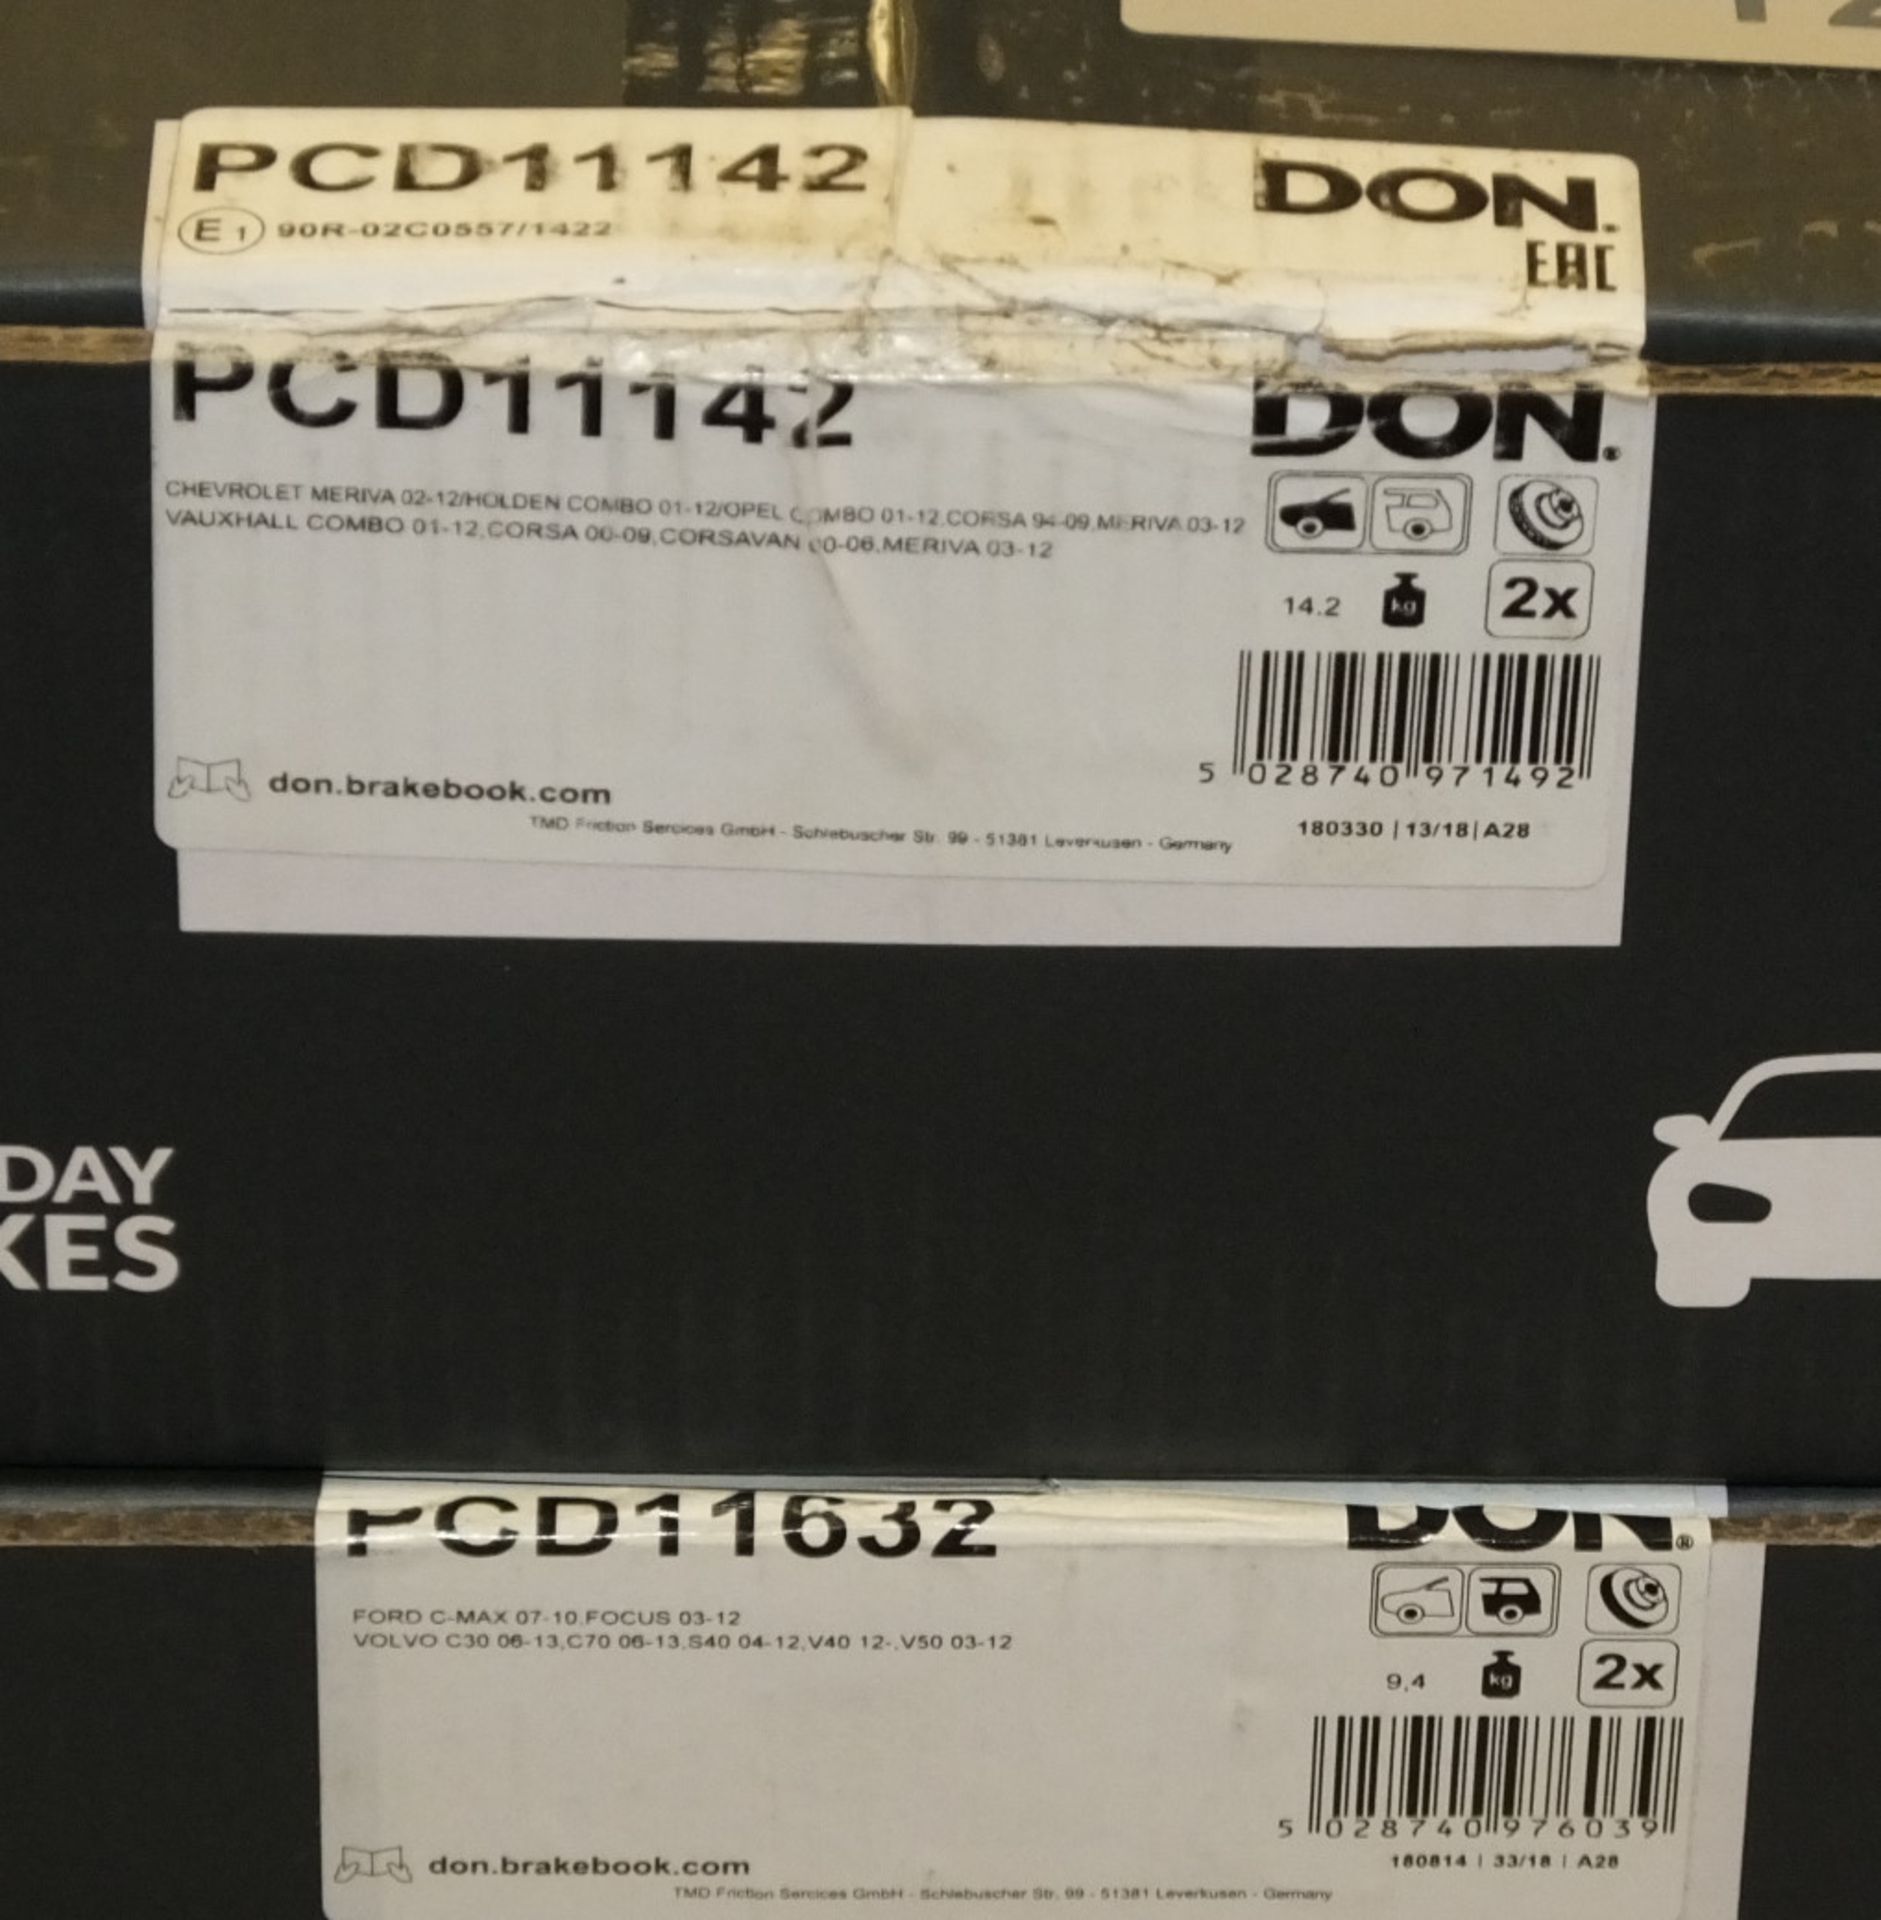 2x Don Brake Disc Sets - Models - PCD11142 & PCD11632 - Image 2 of 2